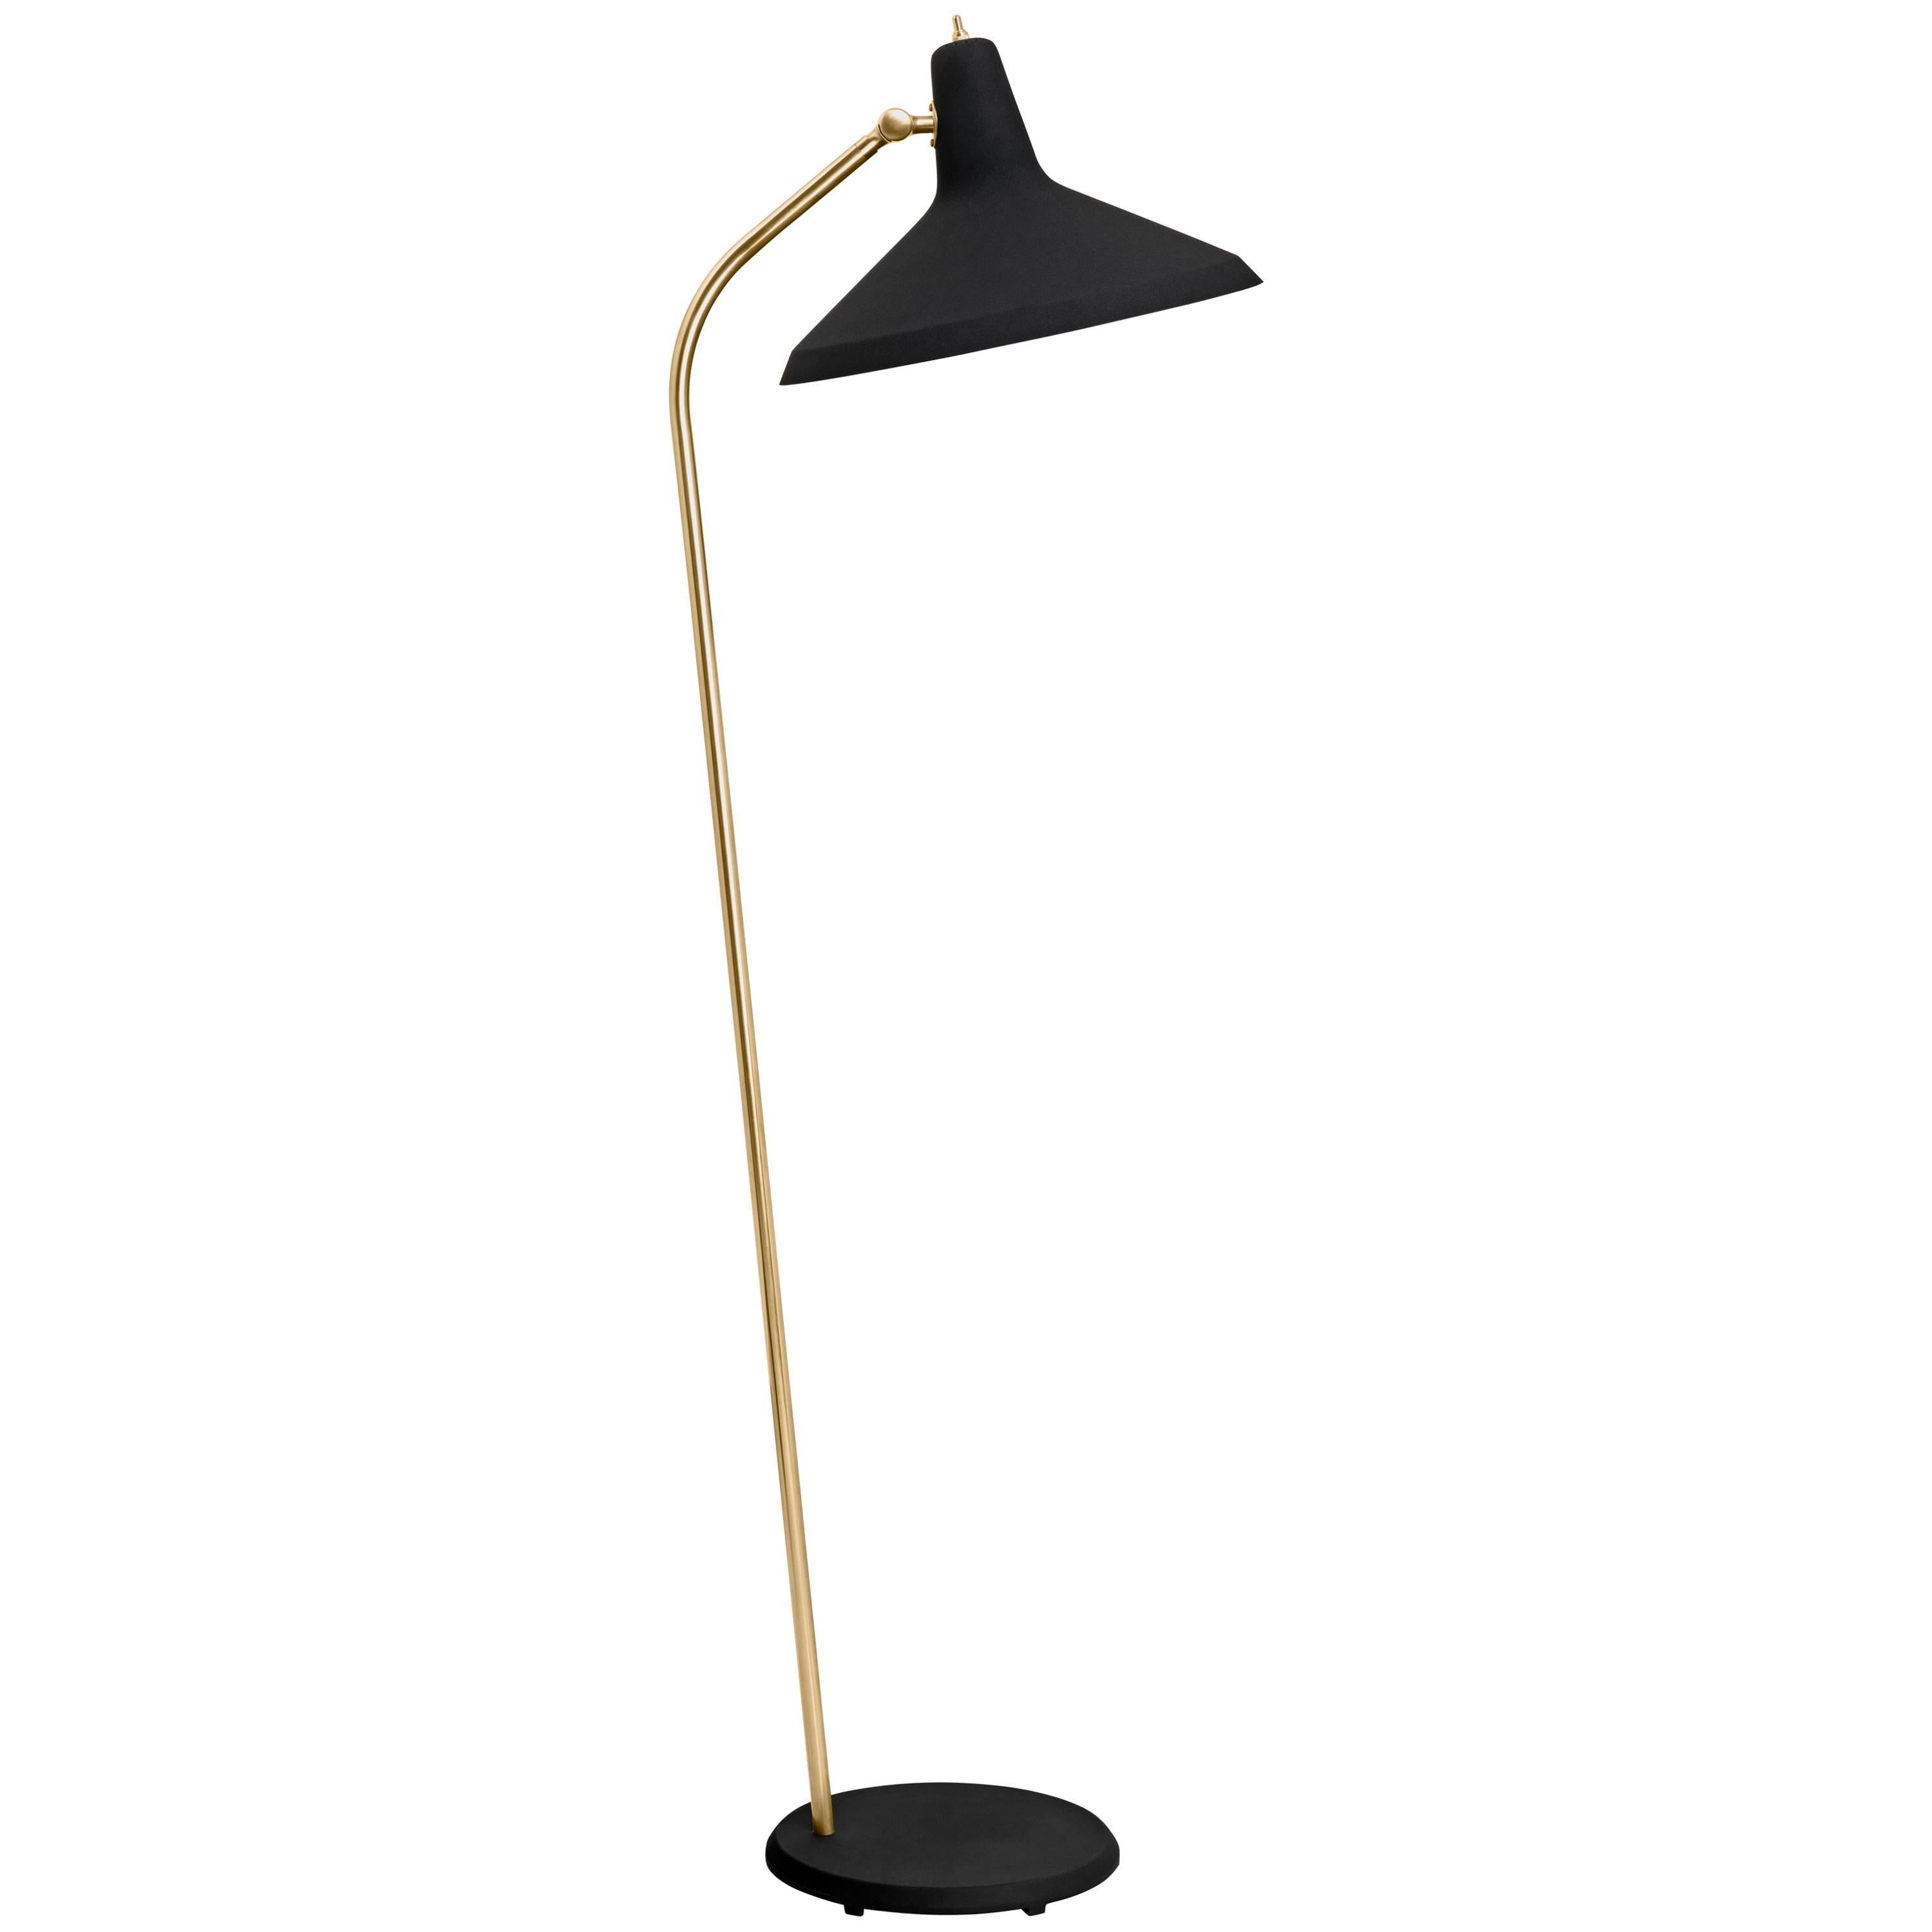 Contemporary Greta Magnusson Grossman 'G-10' Pendant Lamp in Black For Sale